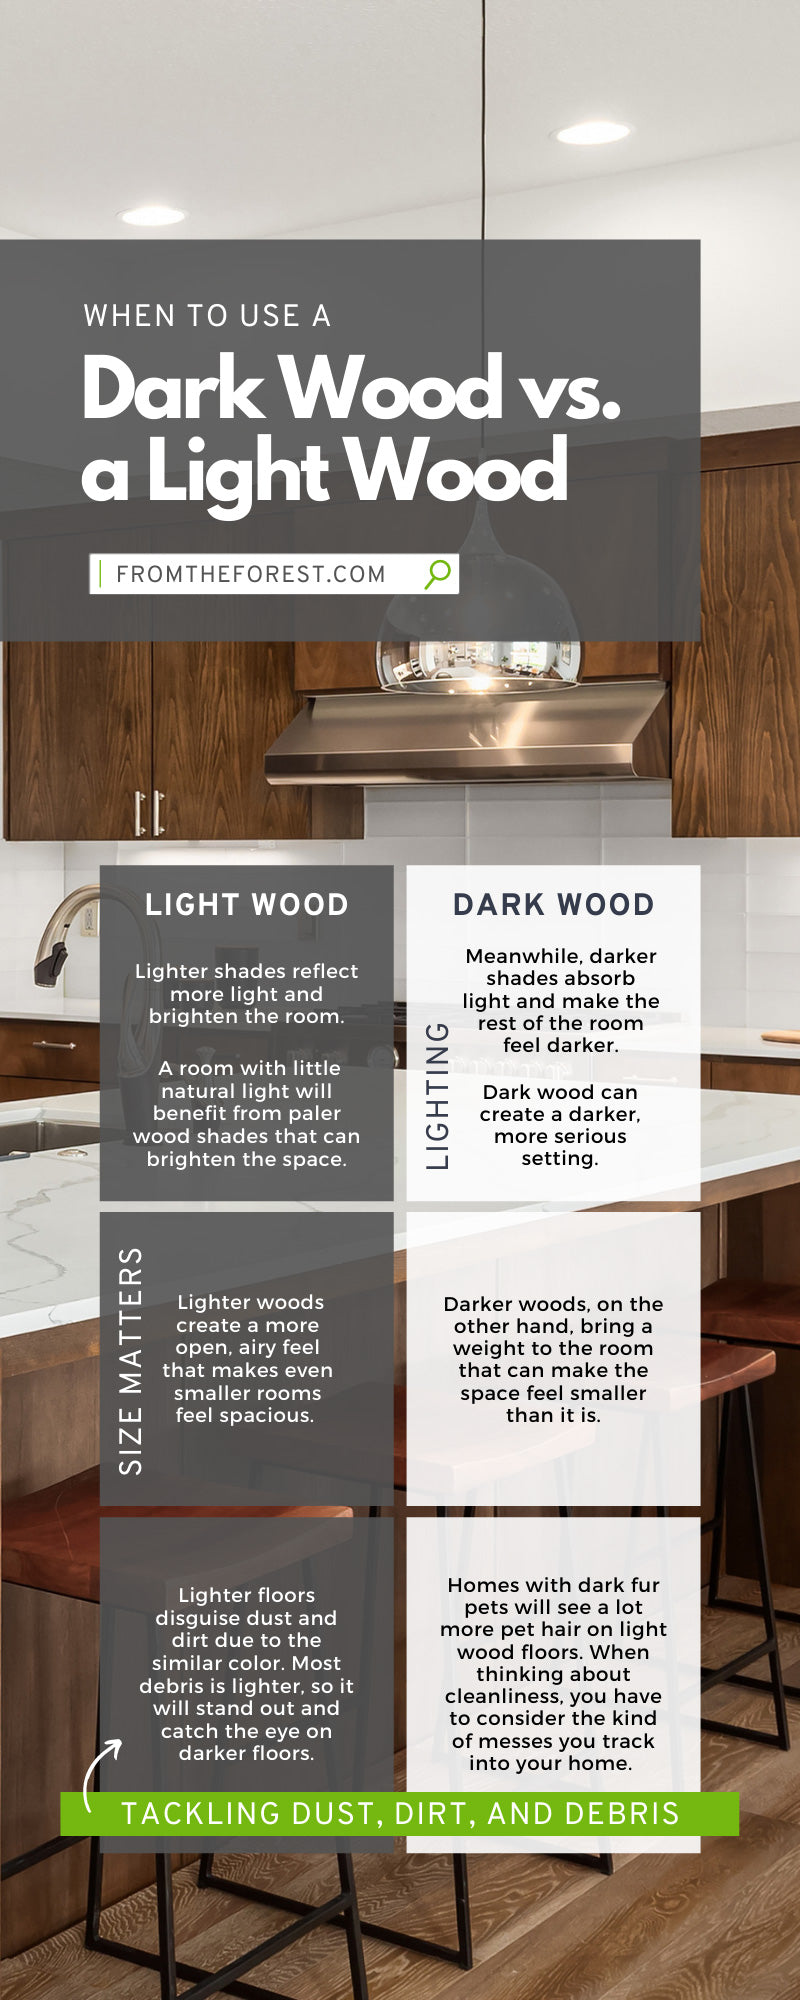 Dark Wood: Types, Properties & Advantages